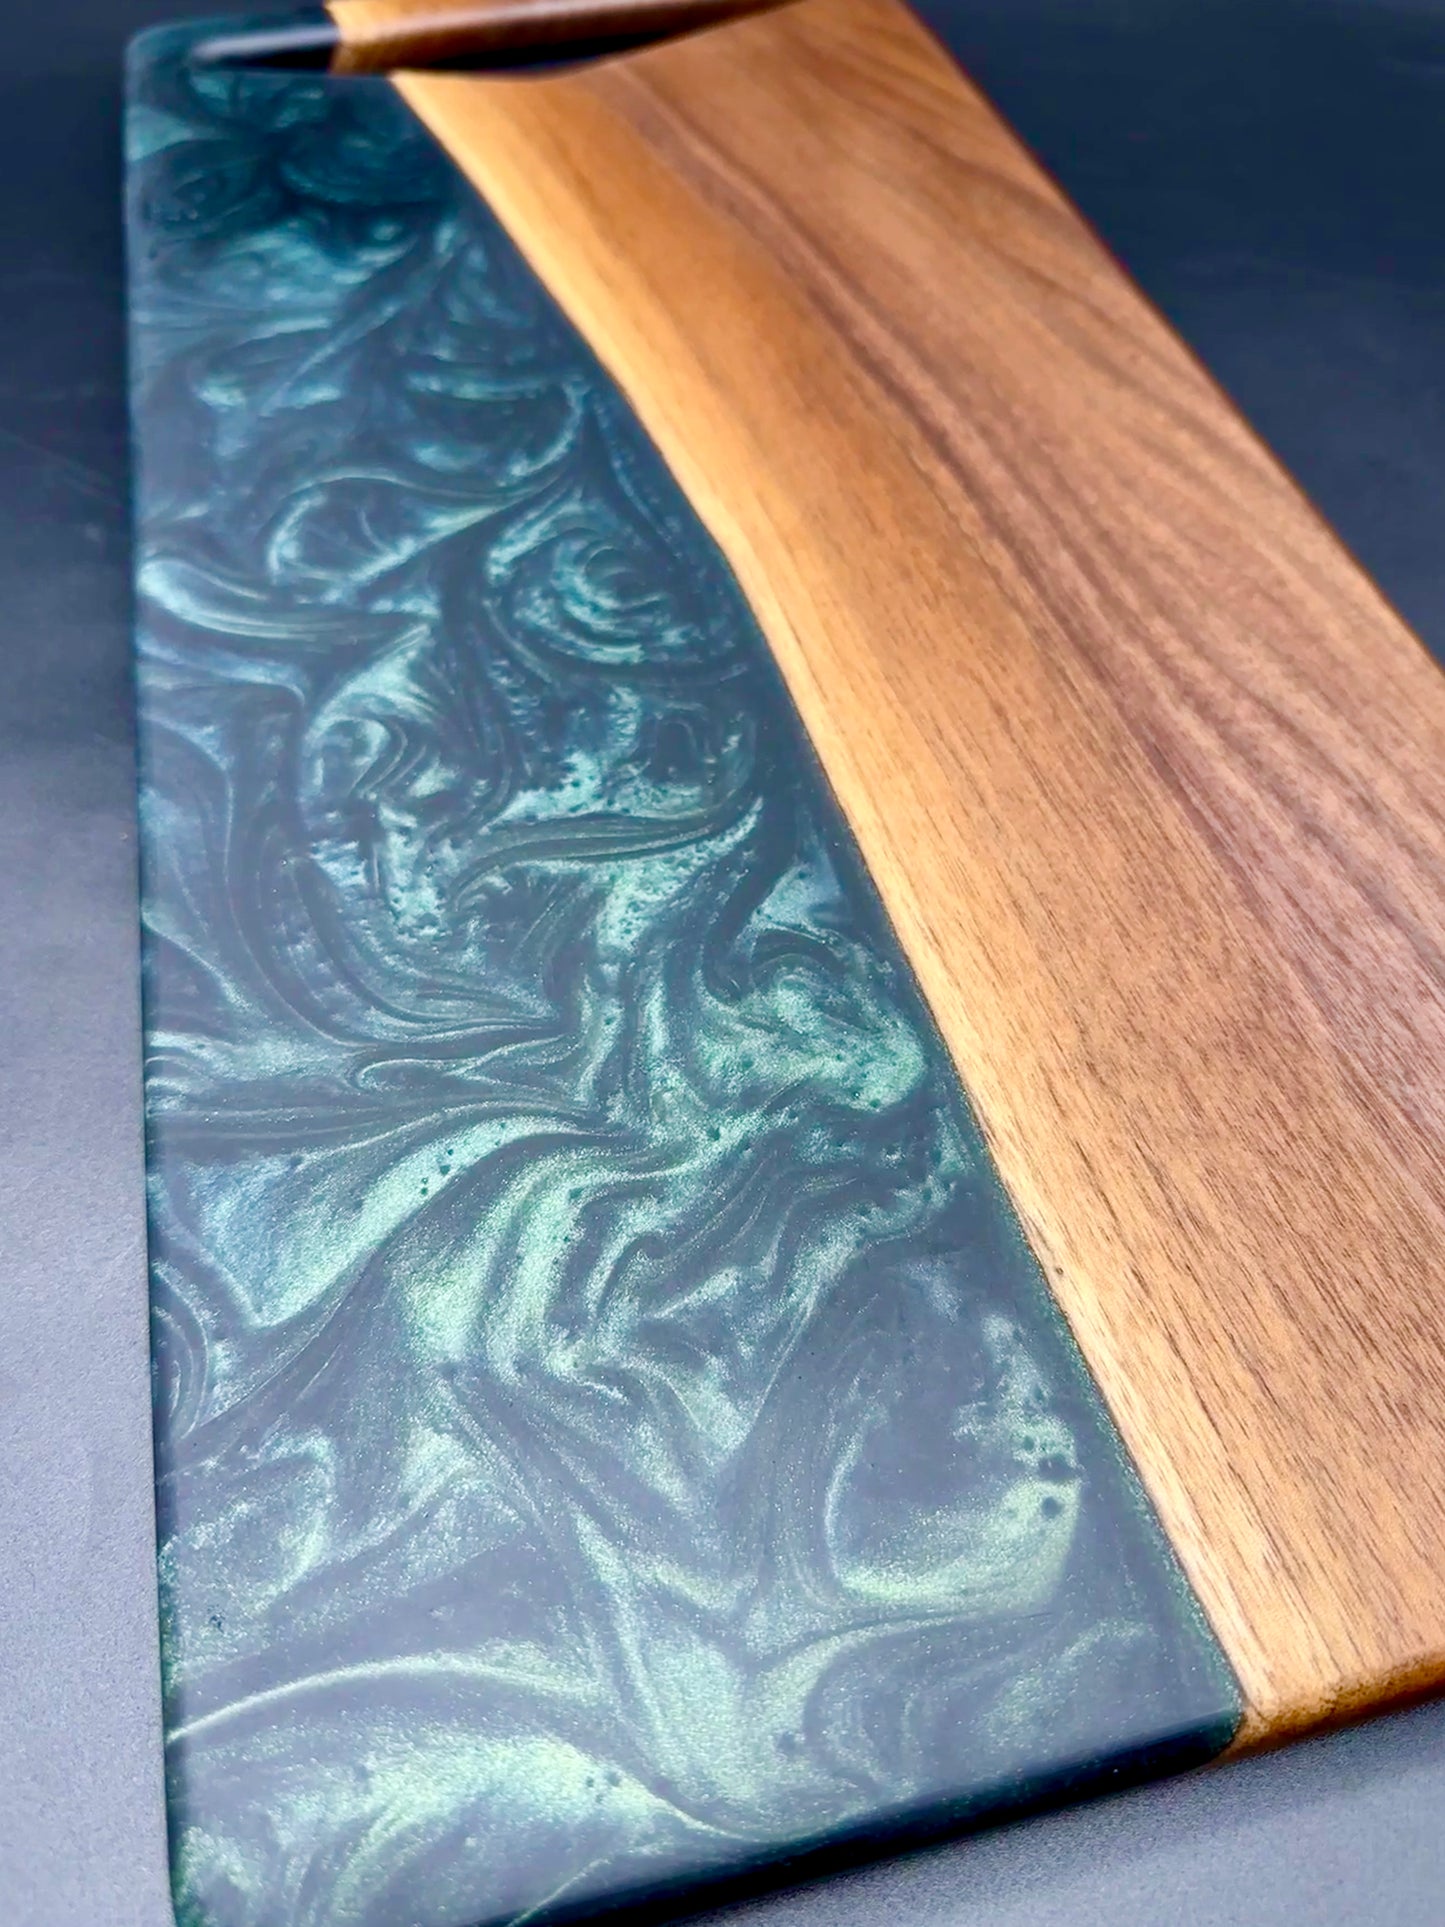 Walnut board with green resin